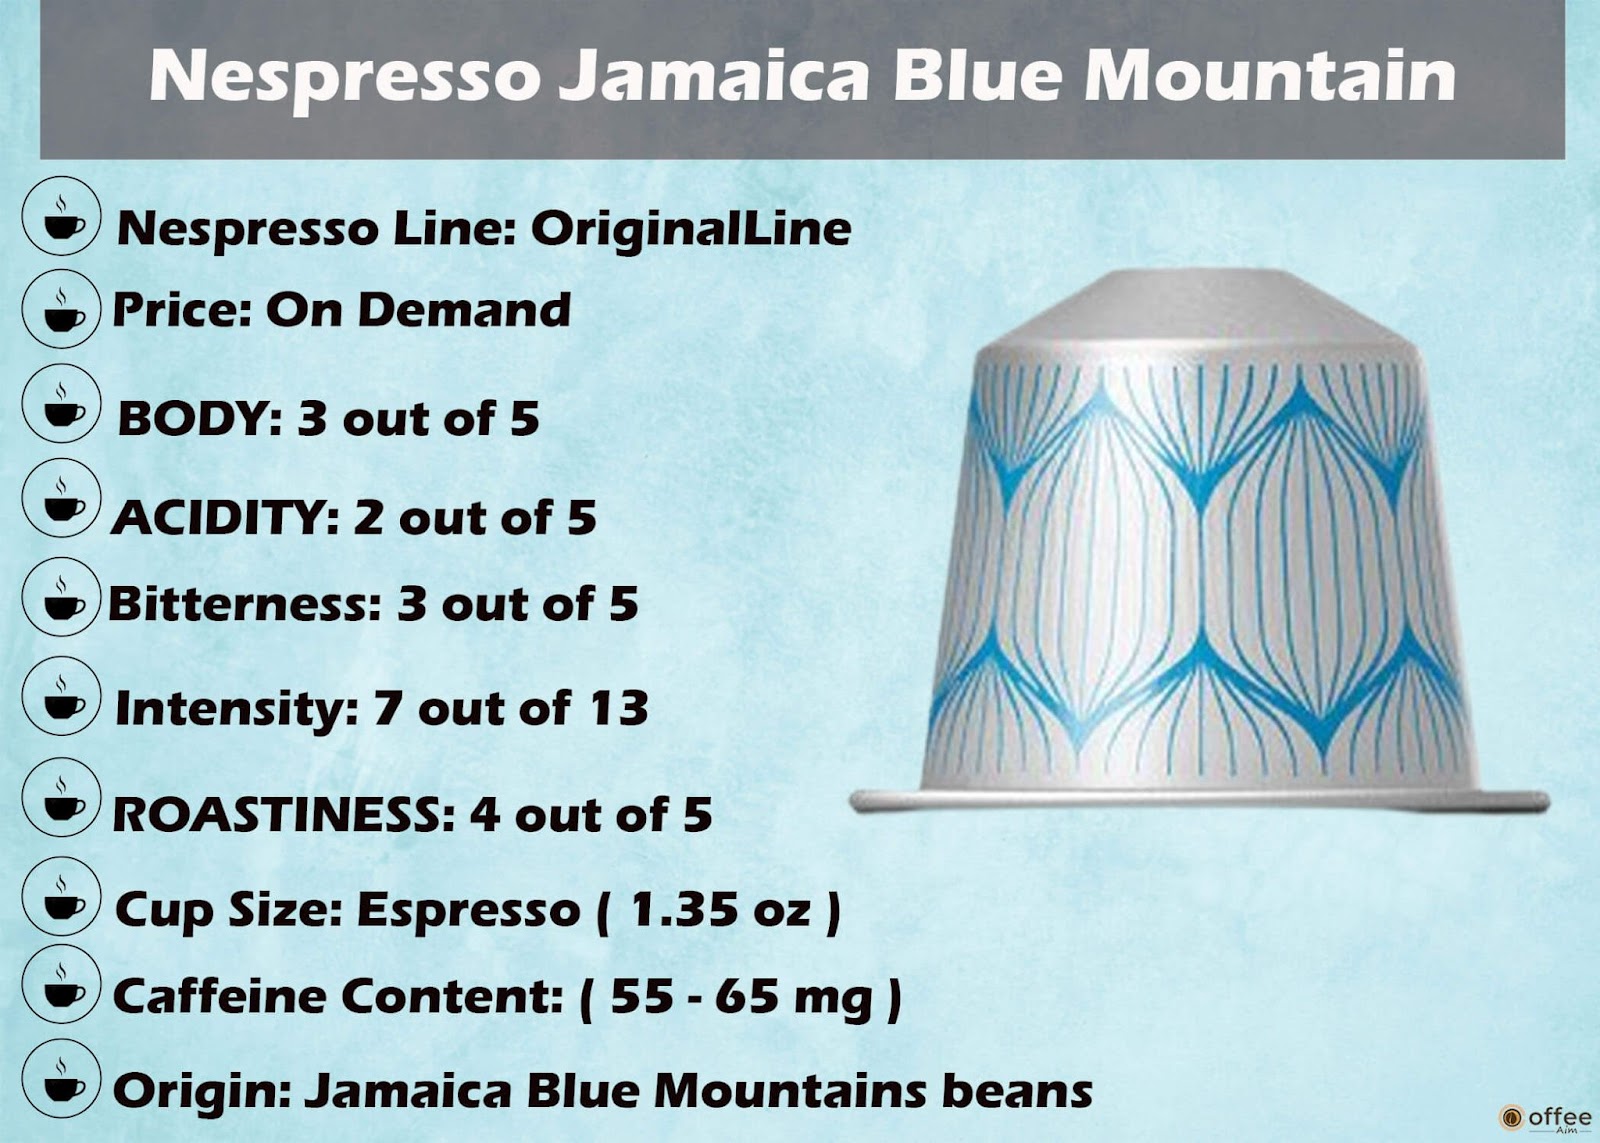 Features Chart of Nespresso Jamaica Blue Mountain Original Line Capsule.